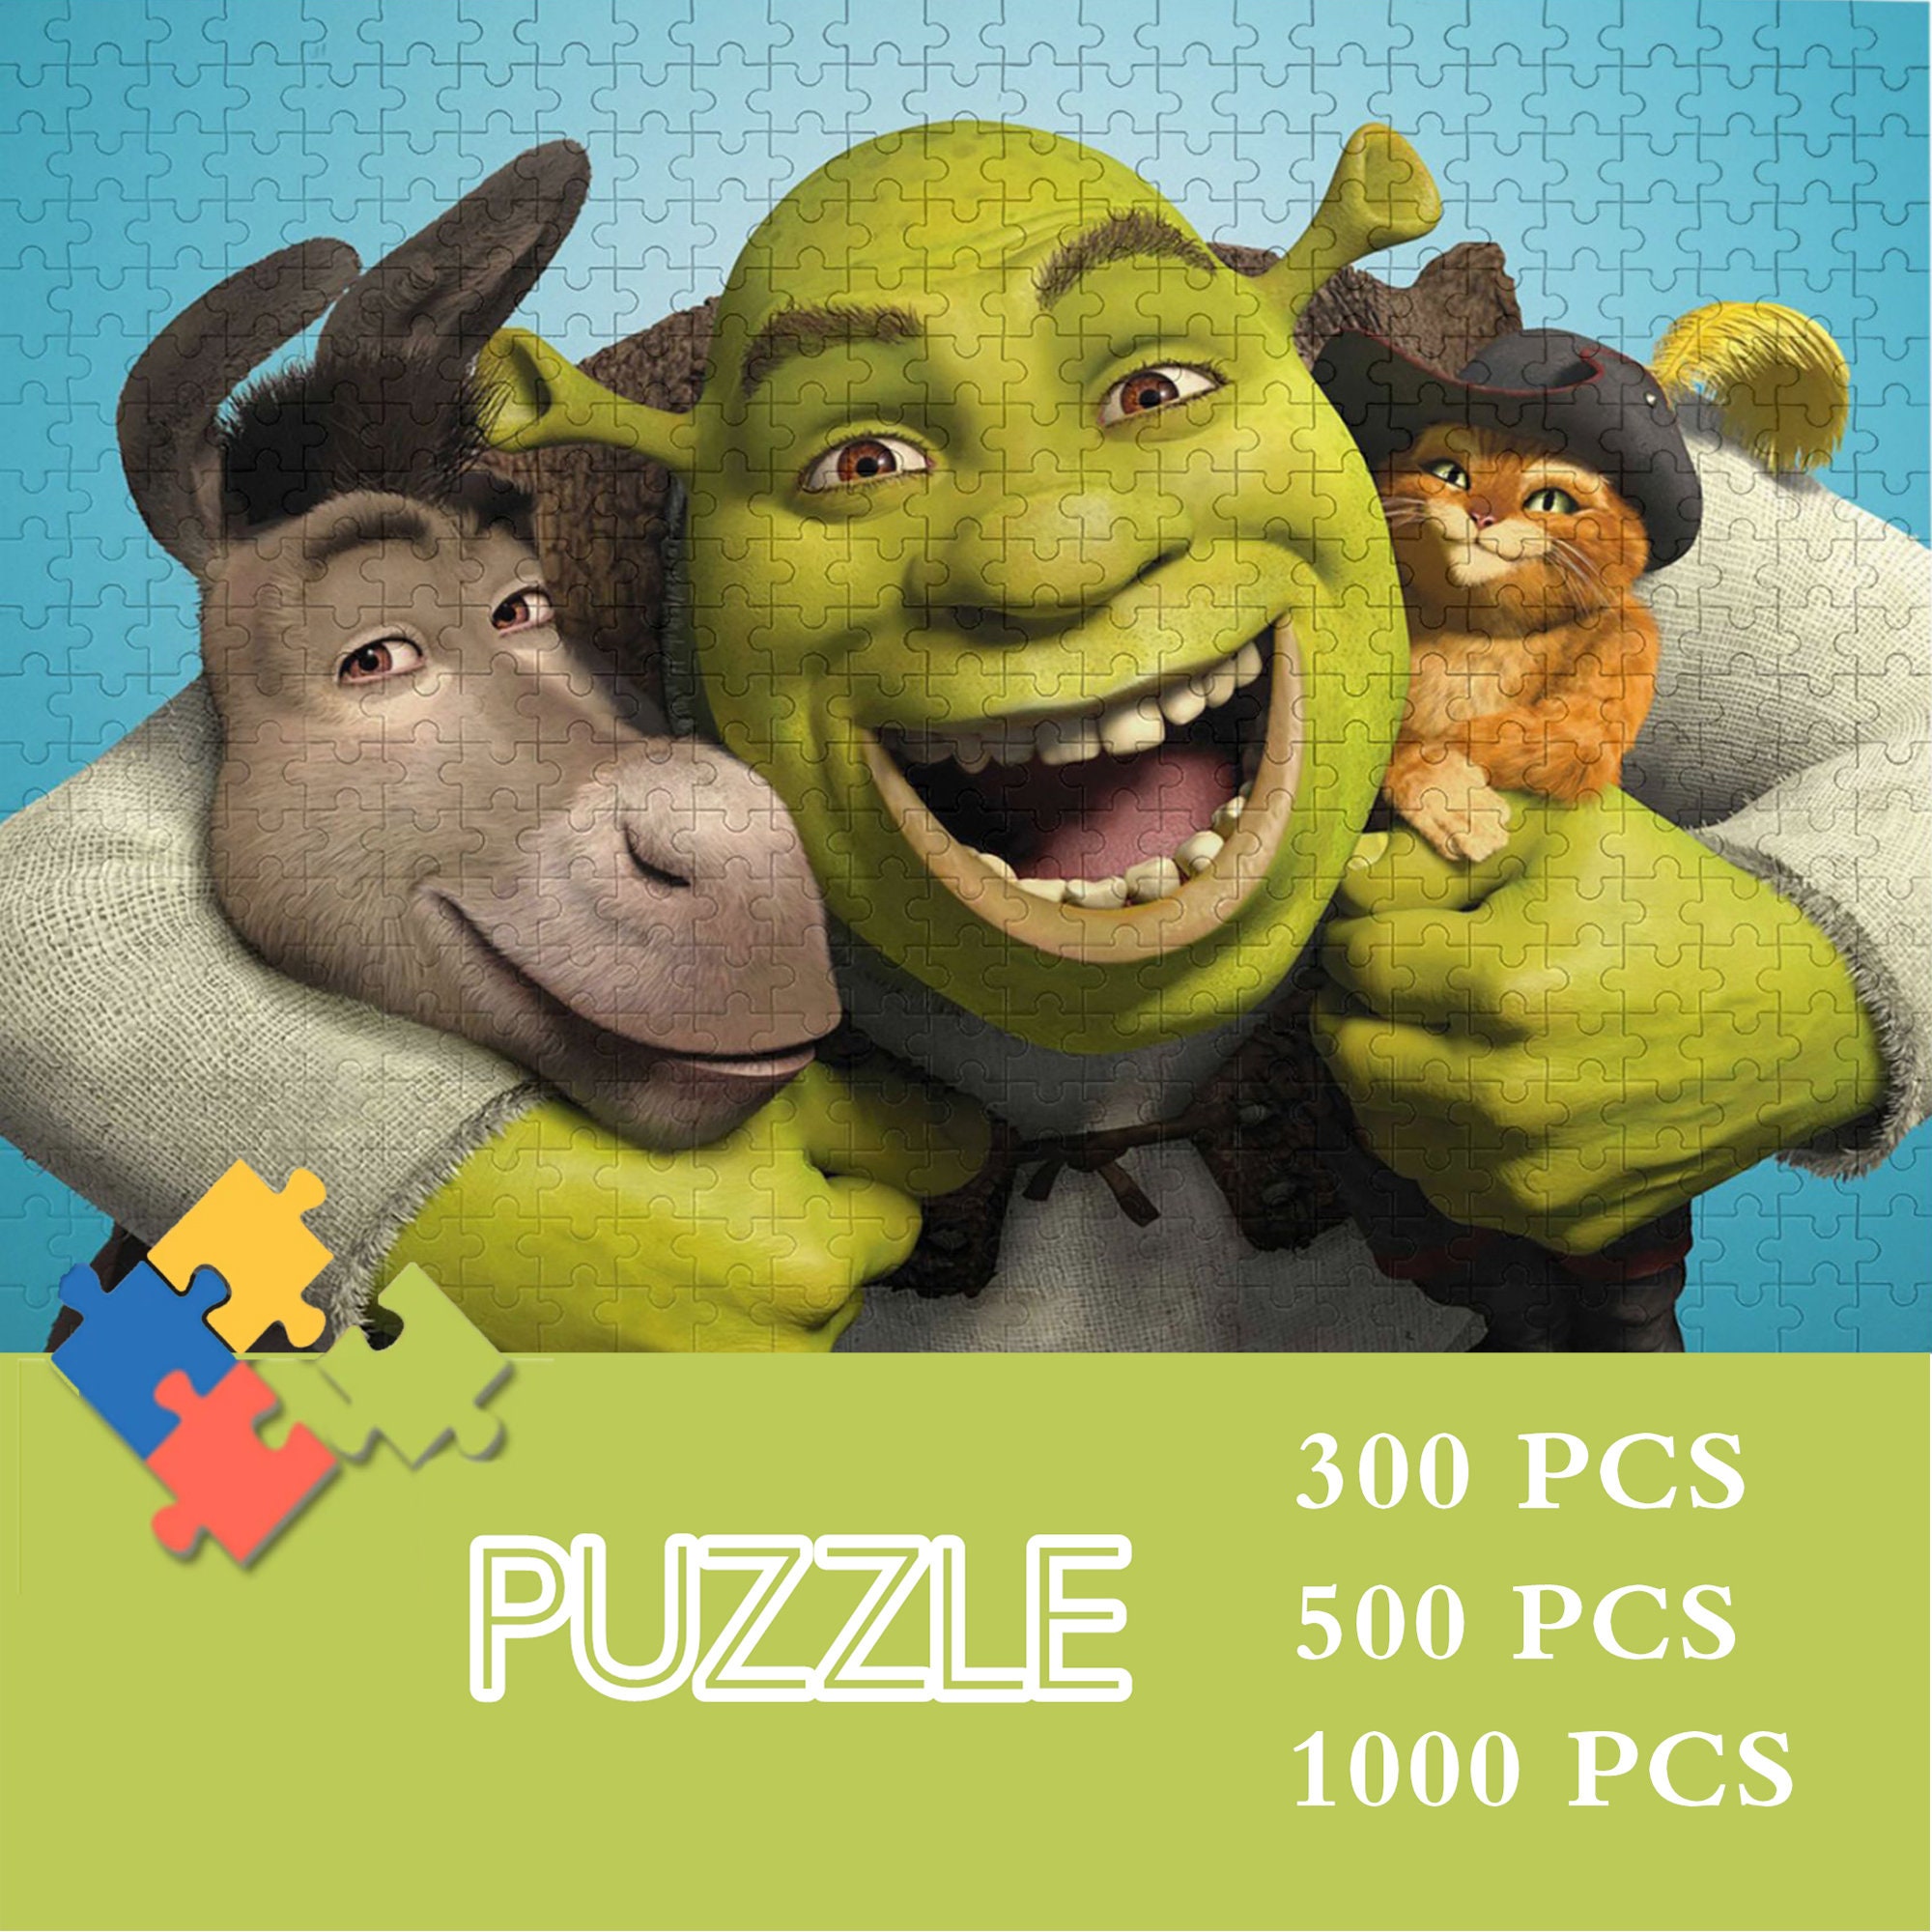 Shrek e burro - ePuzzle photo puzzle